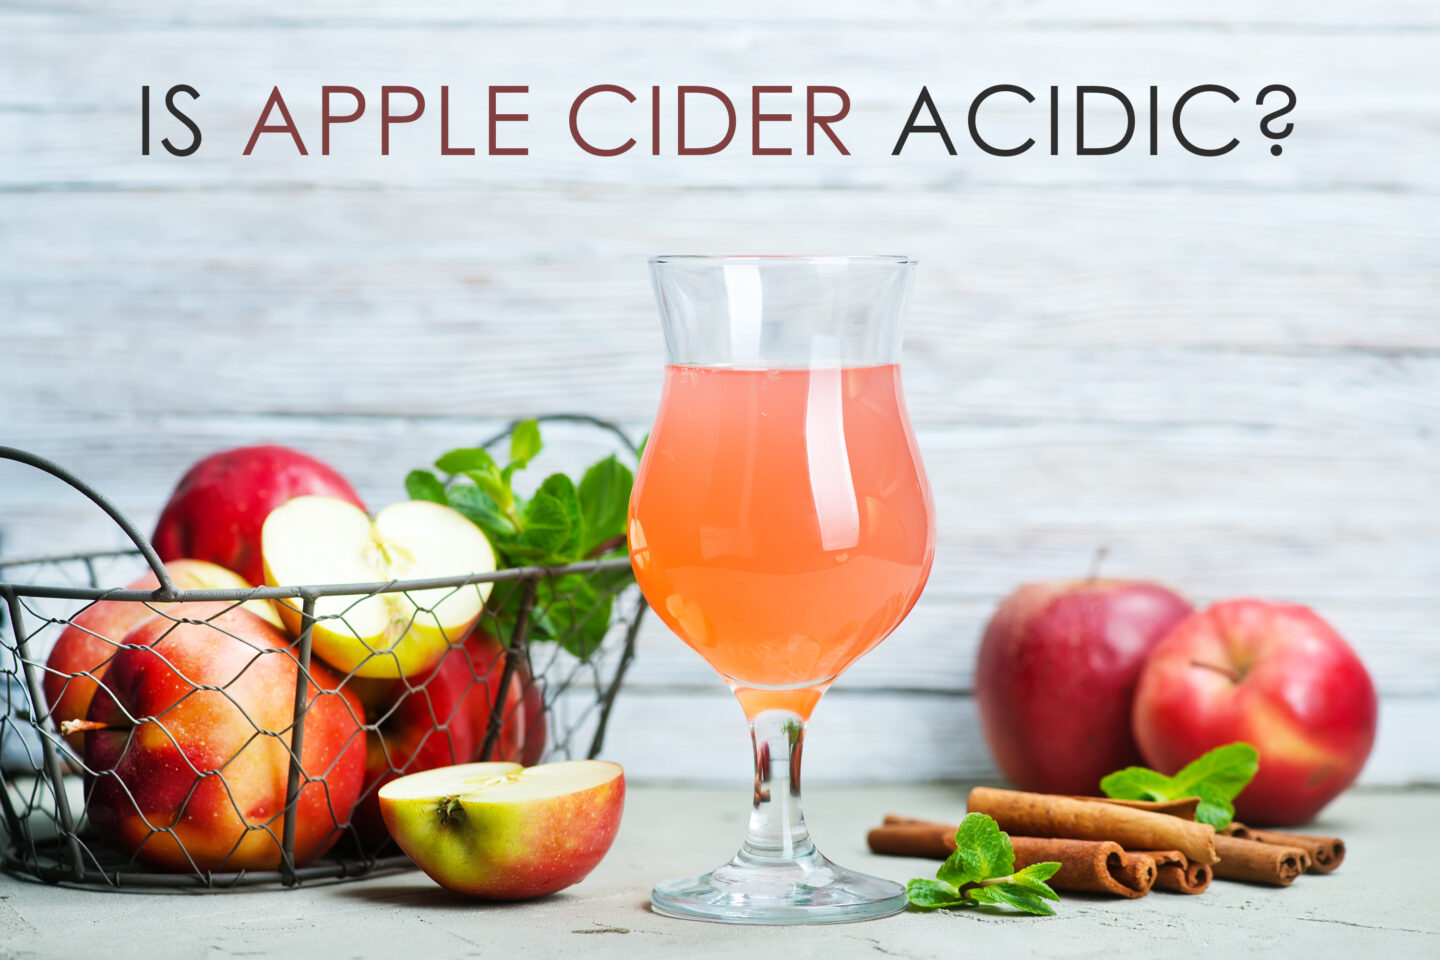 is apple cider acidic or alkaline